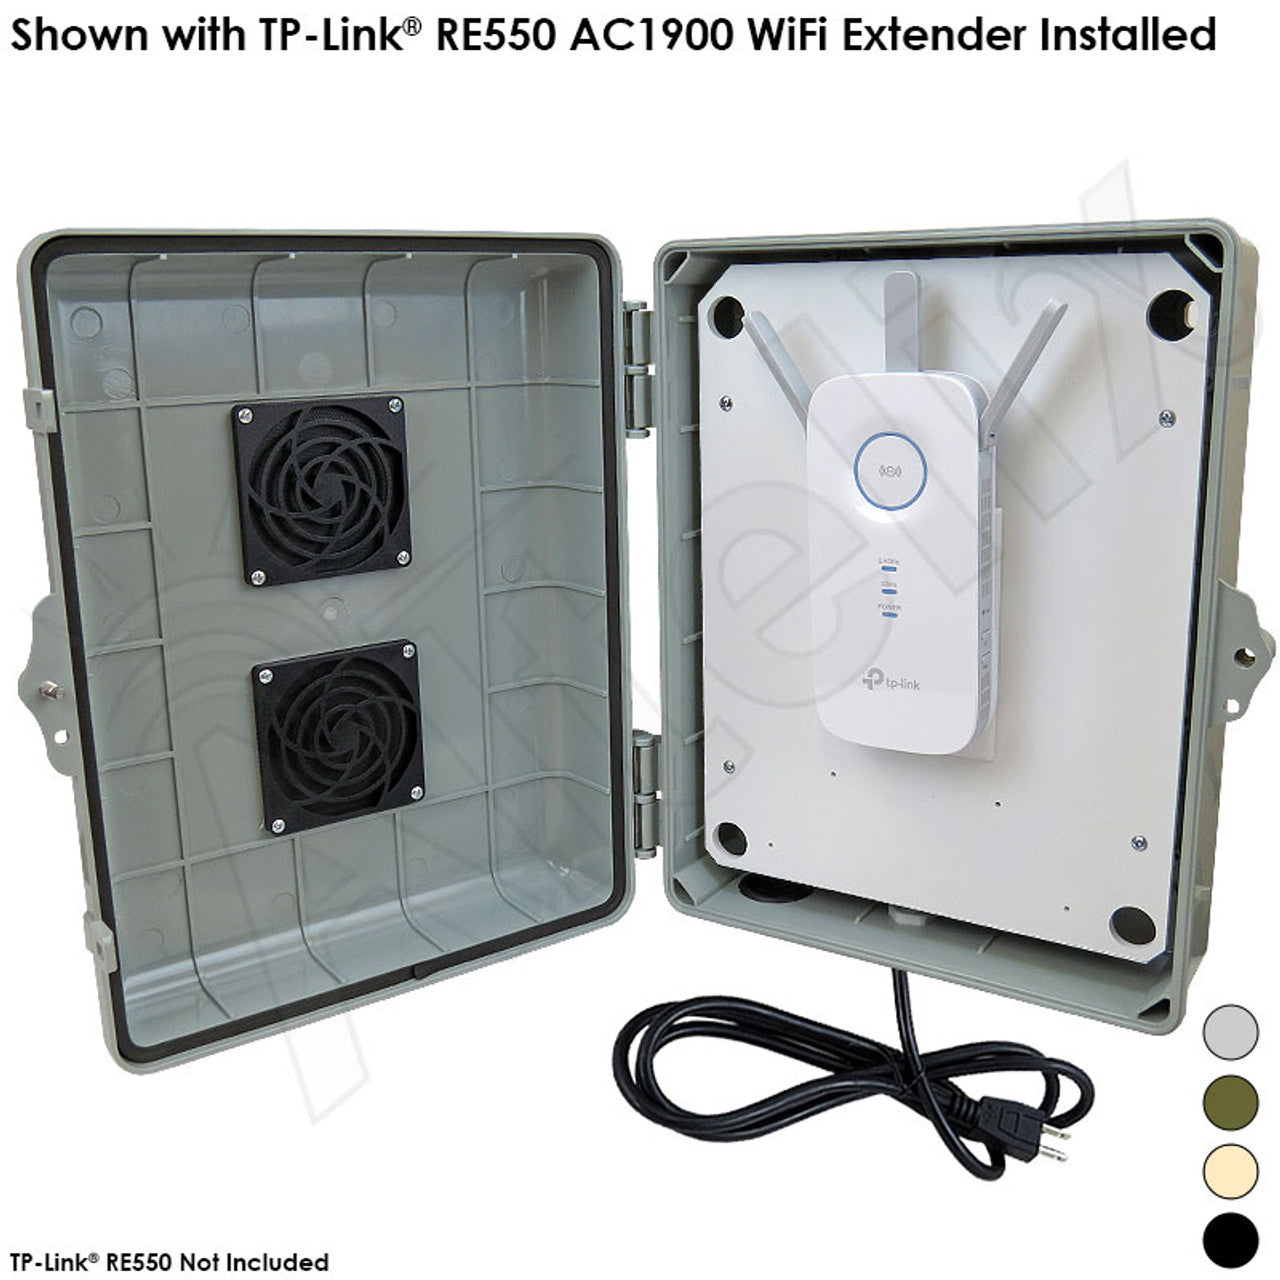 Altelix Weatherproof Vented WiFi Enclosure for TP-Link¬Æ RE550 AC1900 WiFi Extender